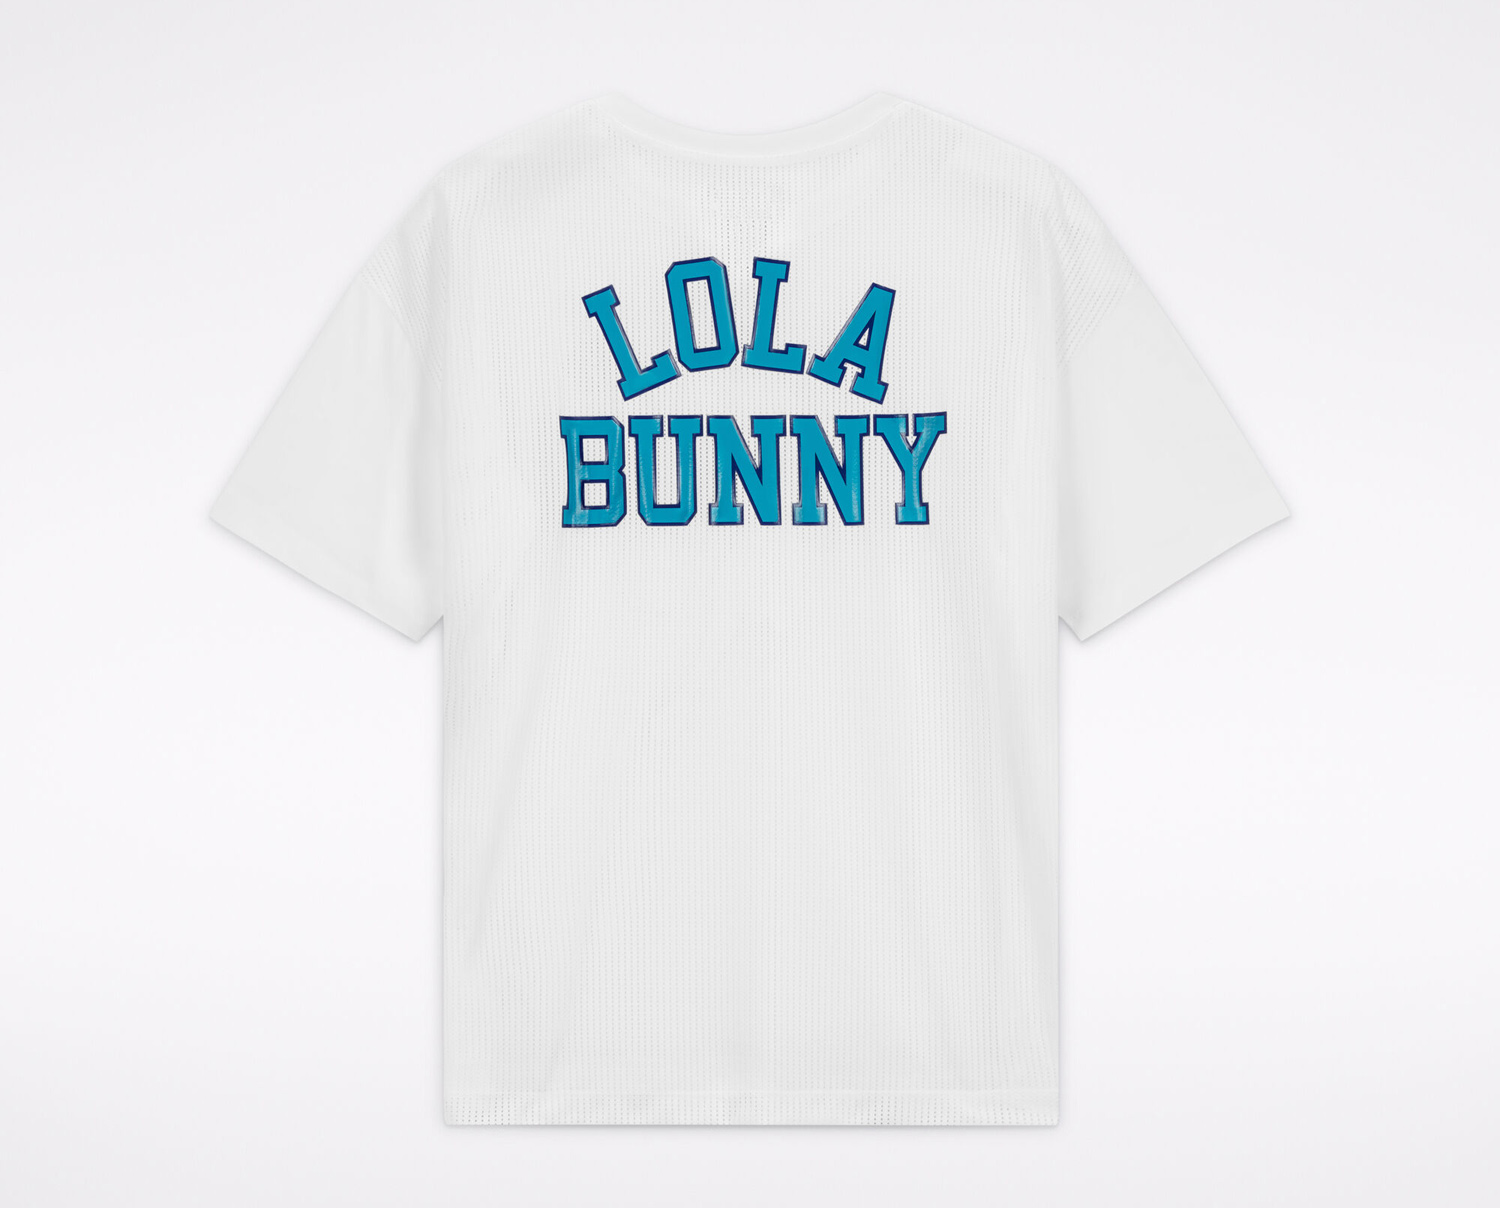 converse-space-lola-bunny-shirt-2